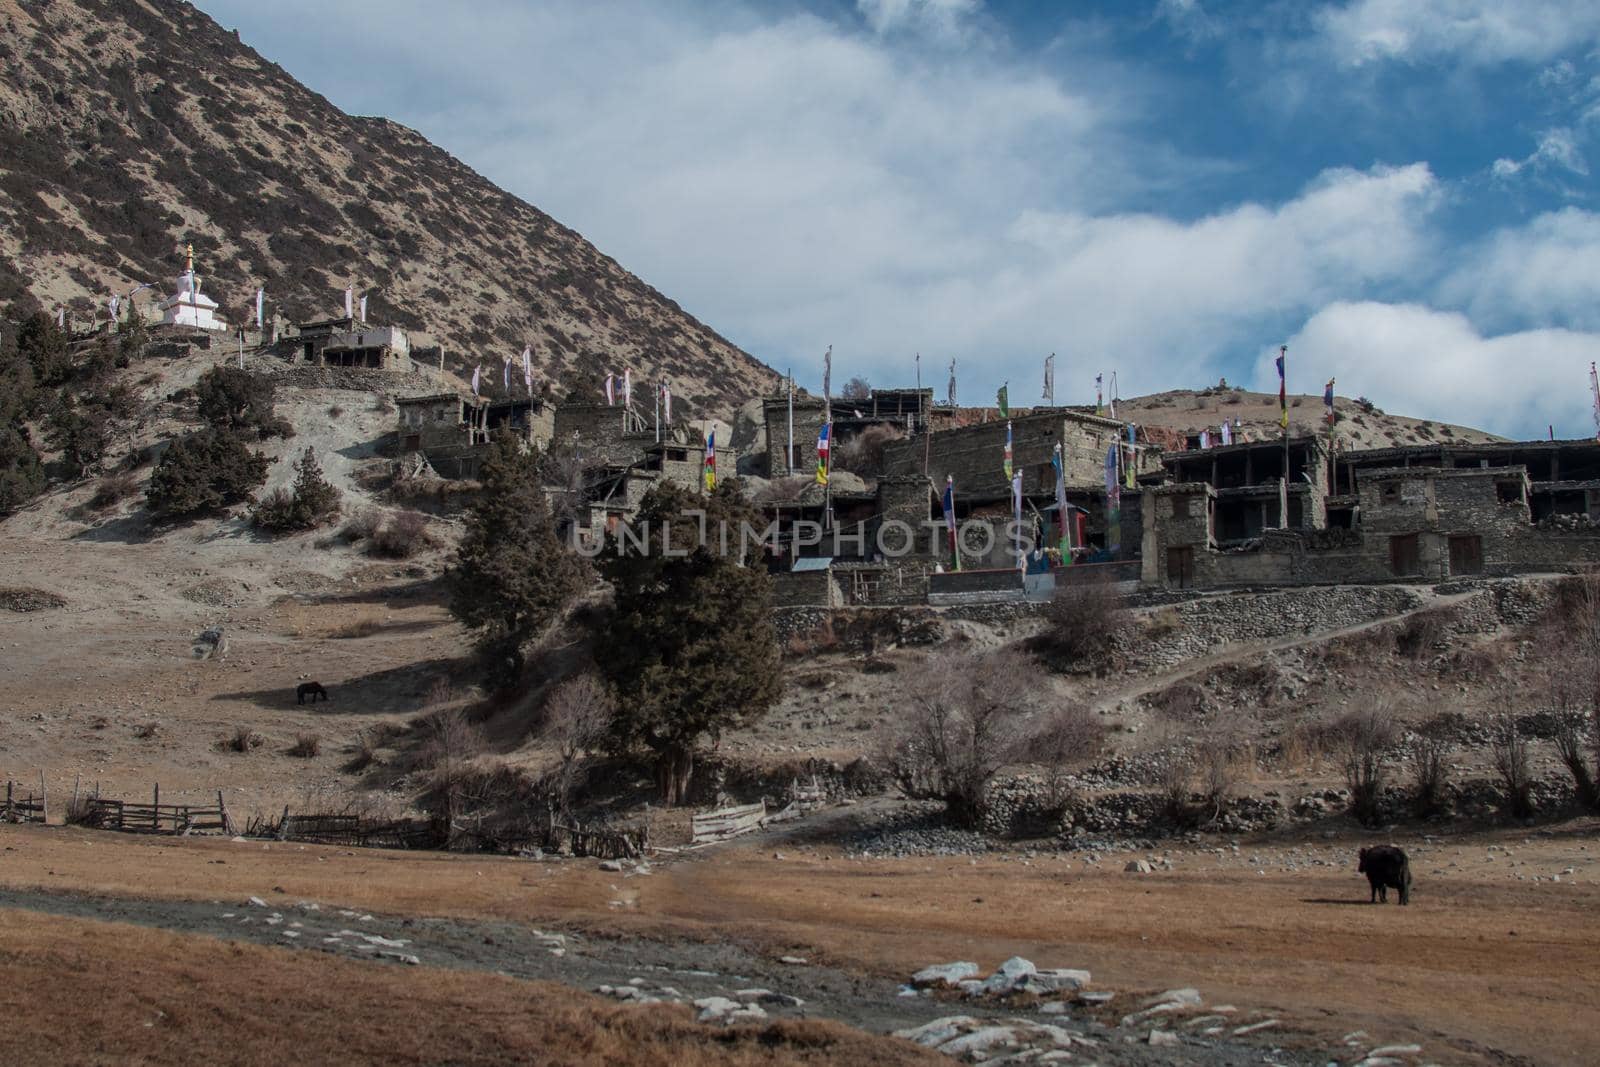 Buddhist monastery in the nepalese mountains, trekking along Annapurna circuit